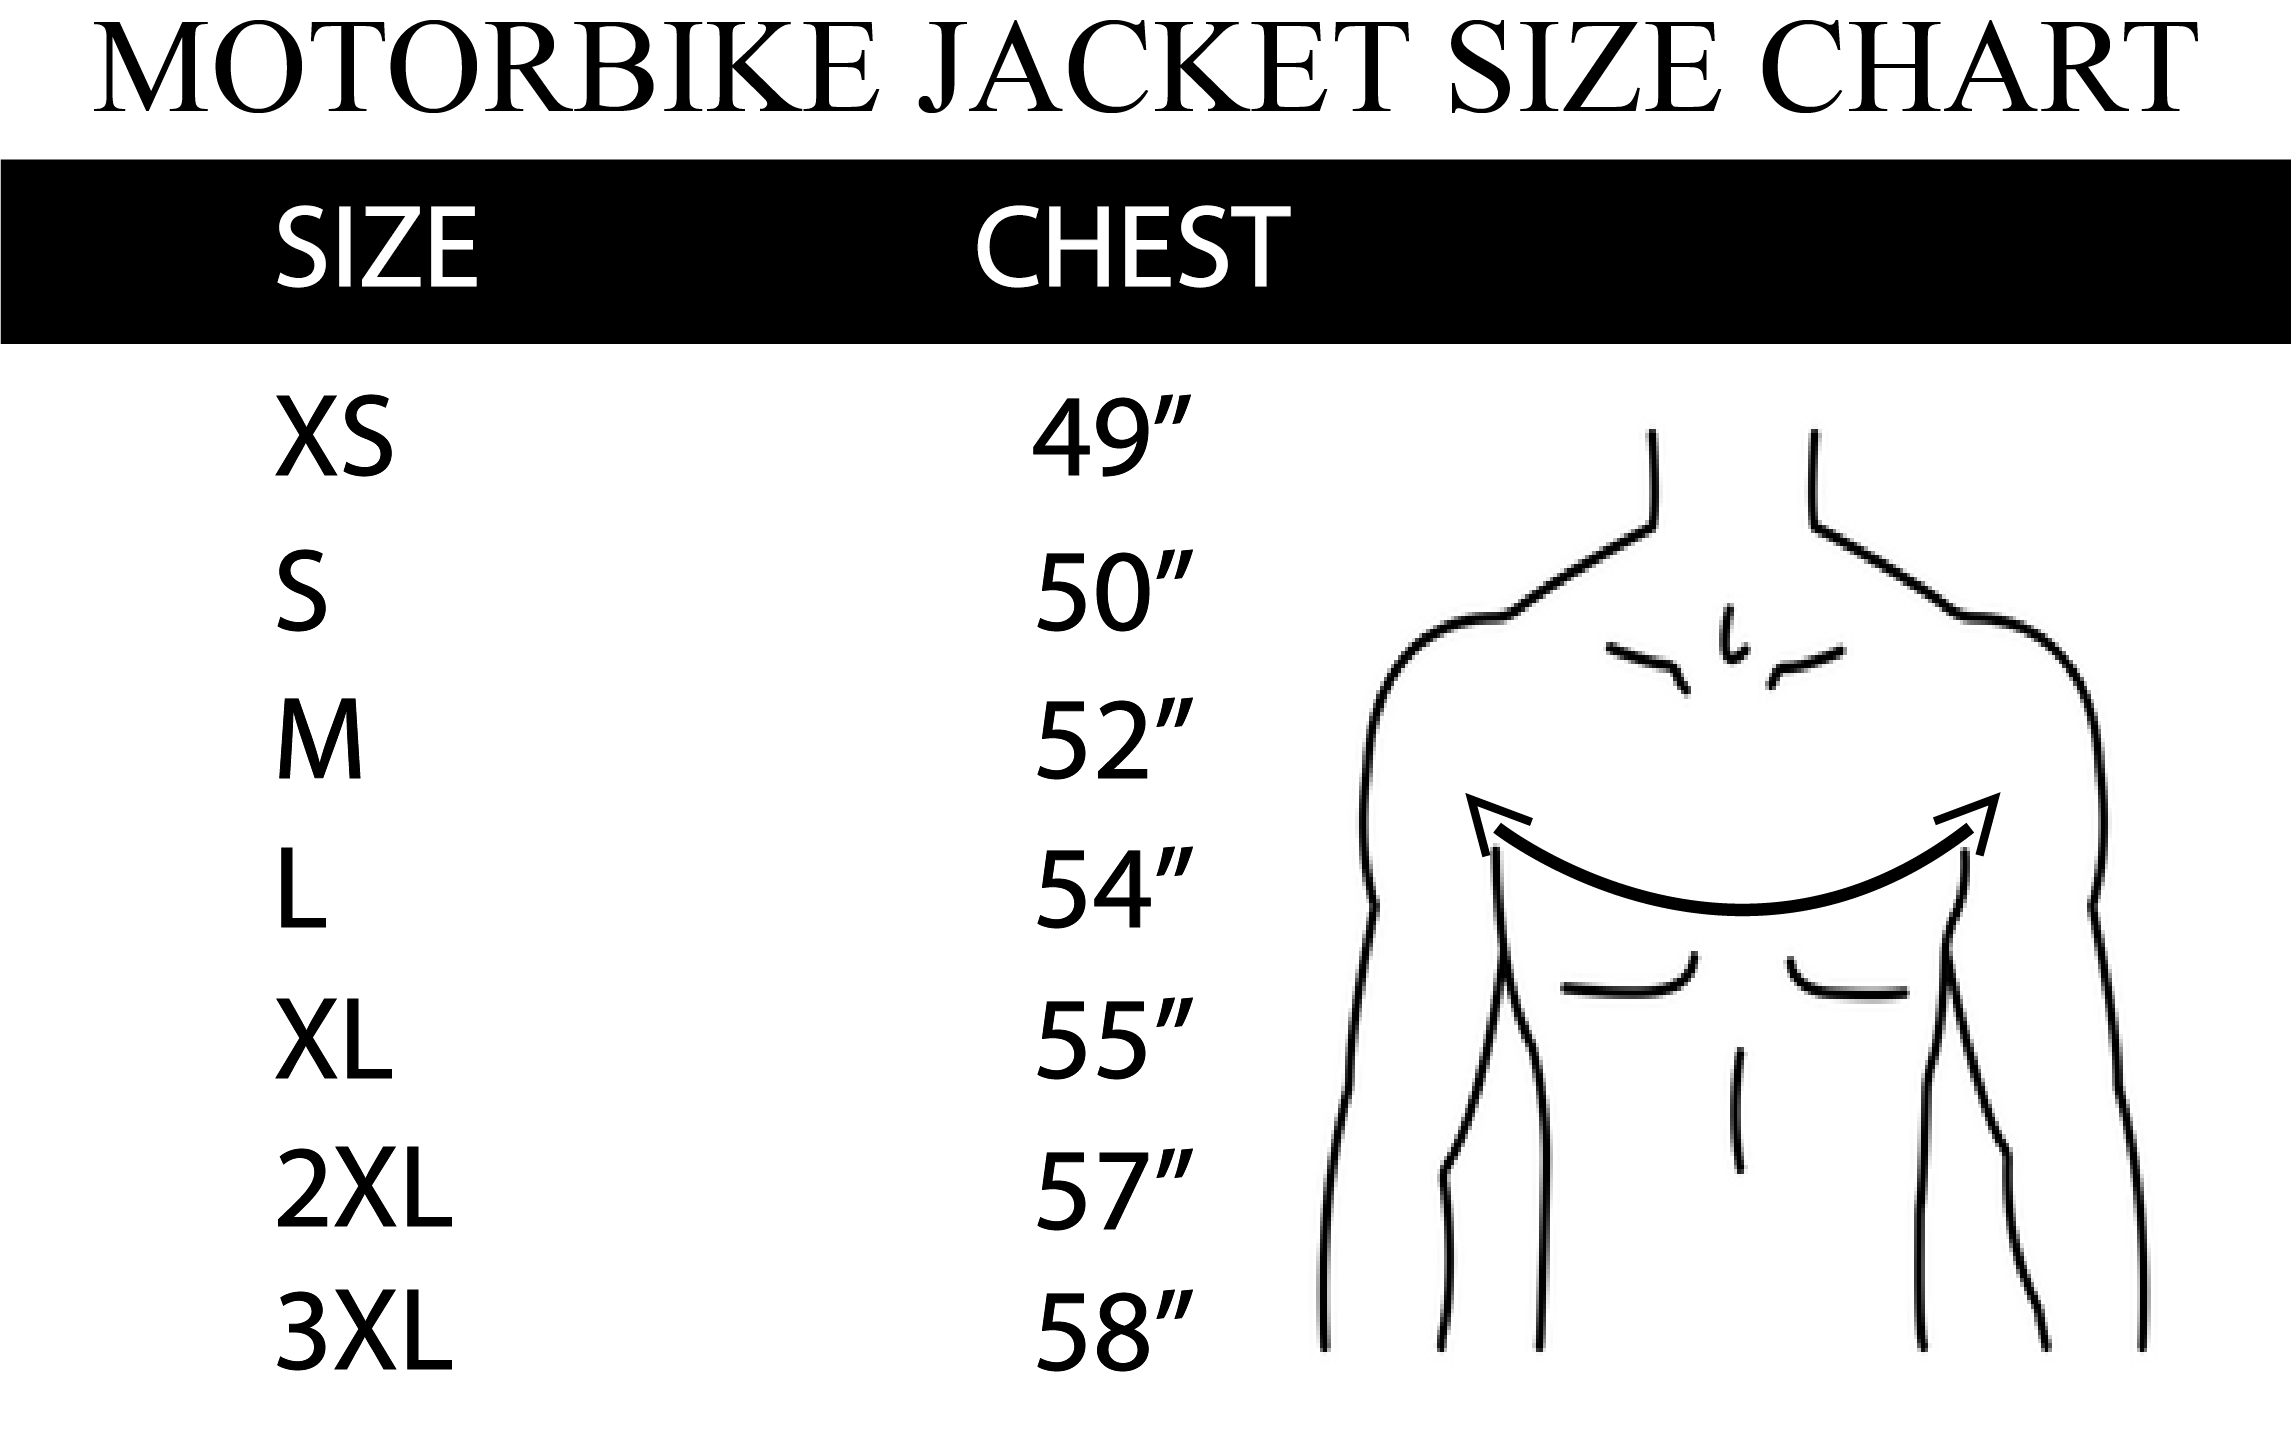 Size chart for men's nylong mesh motorcycle racing style jacket.